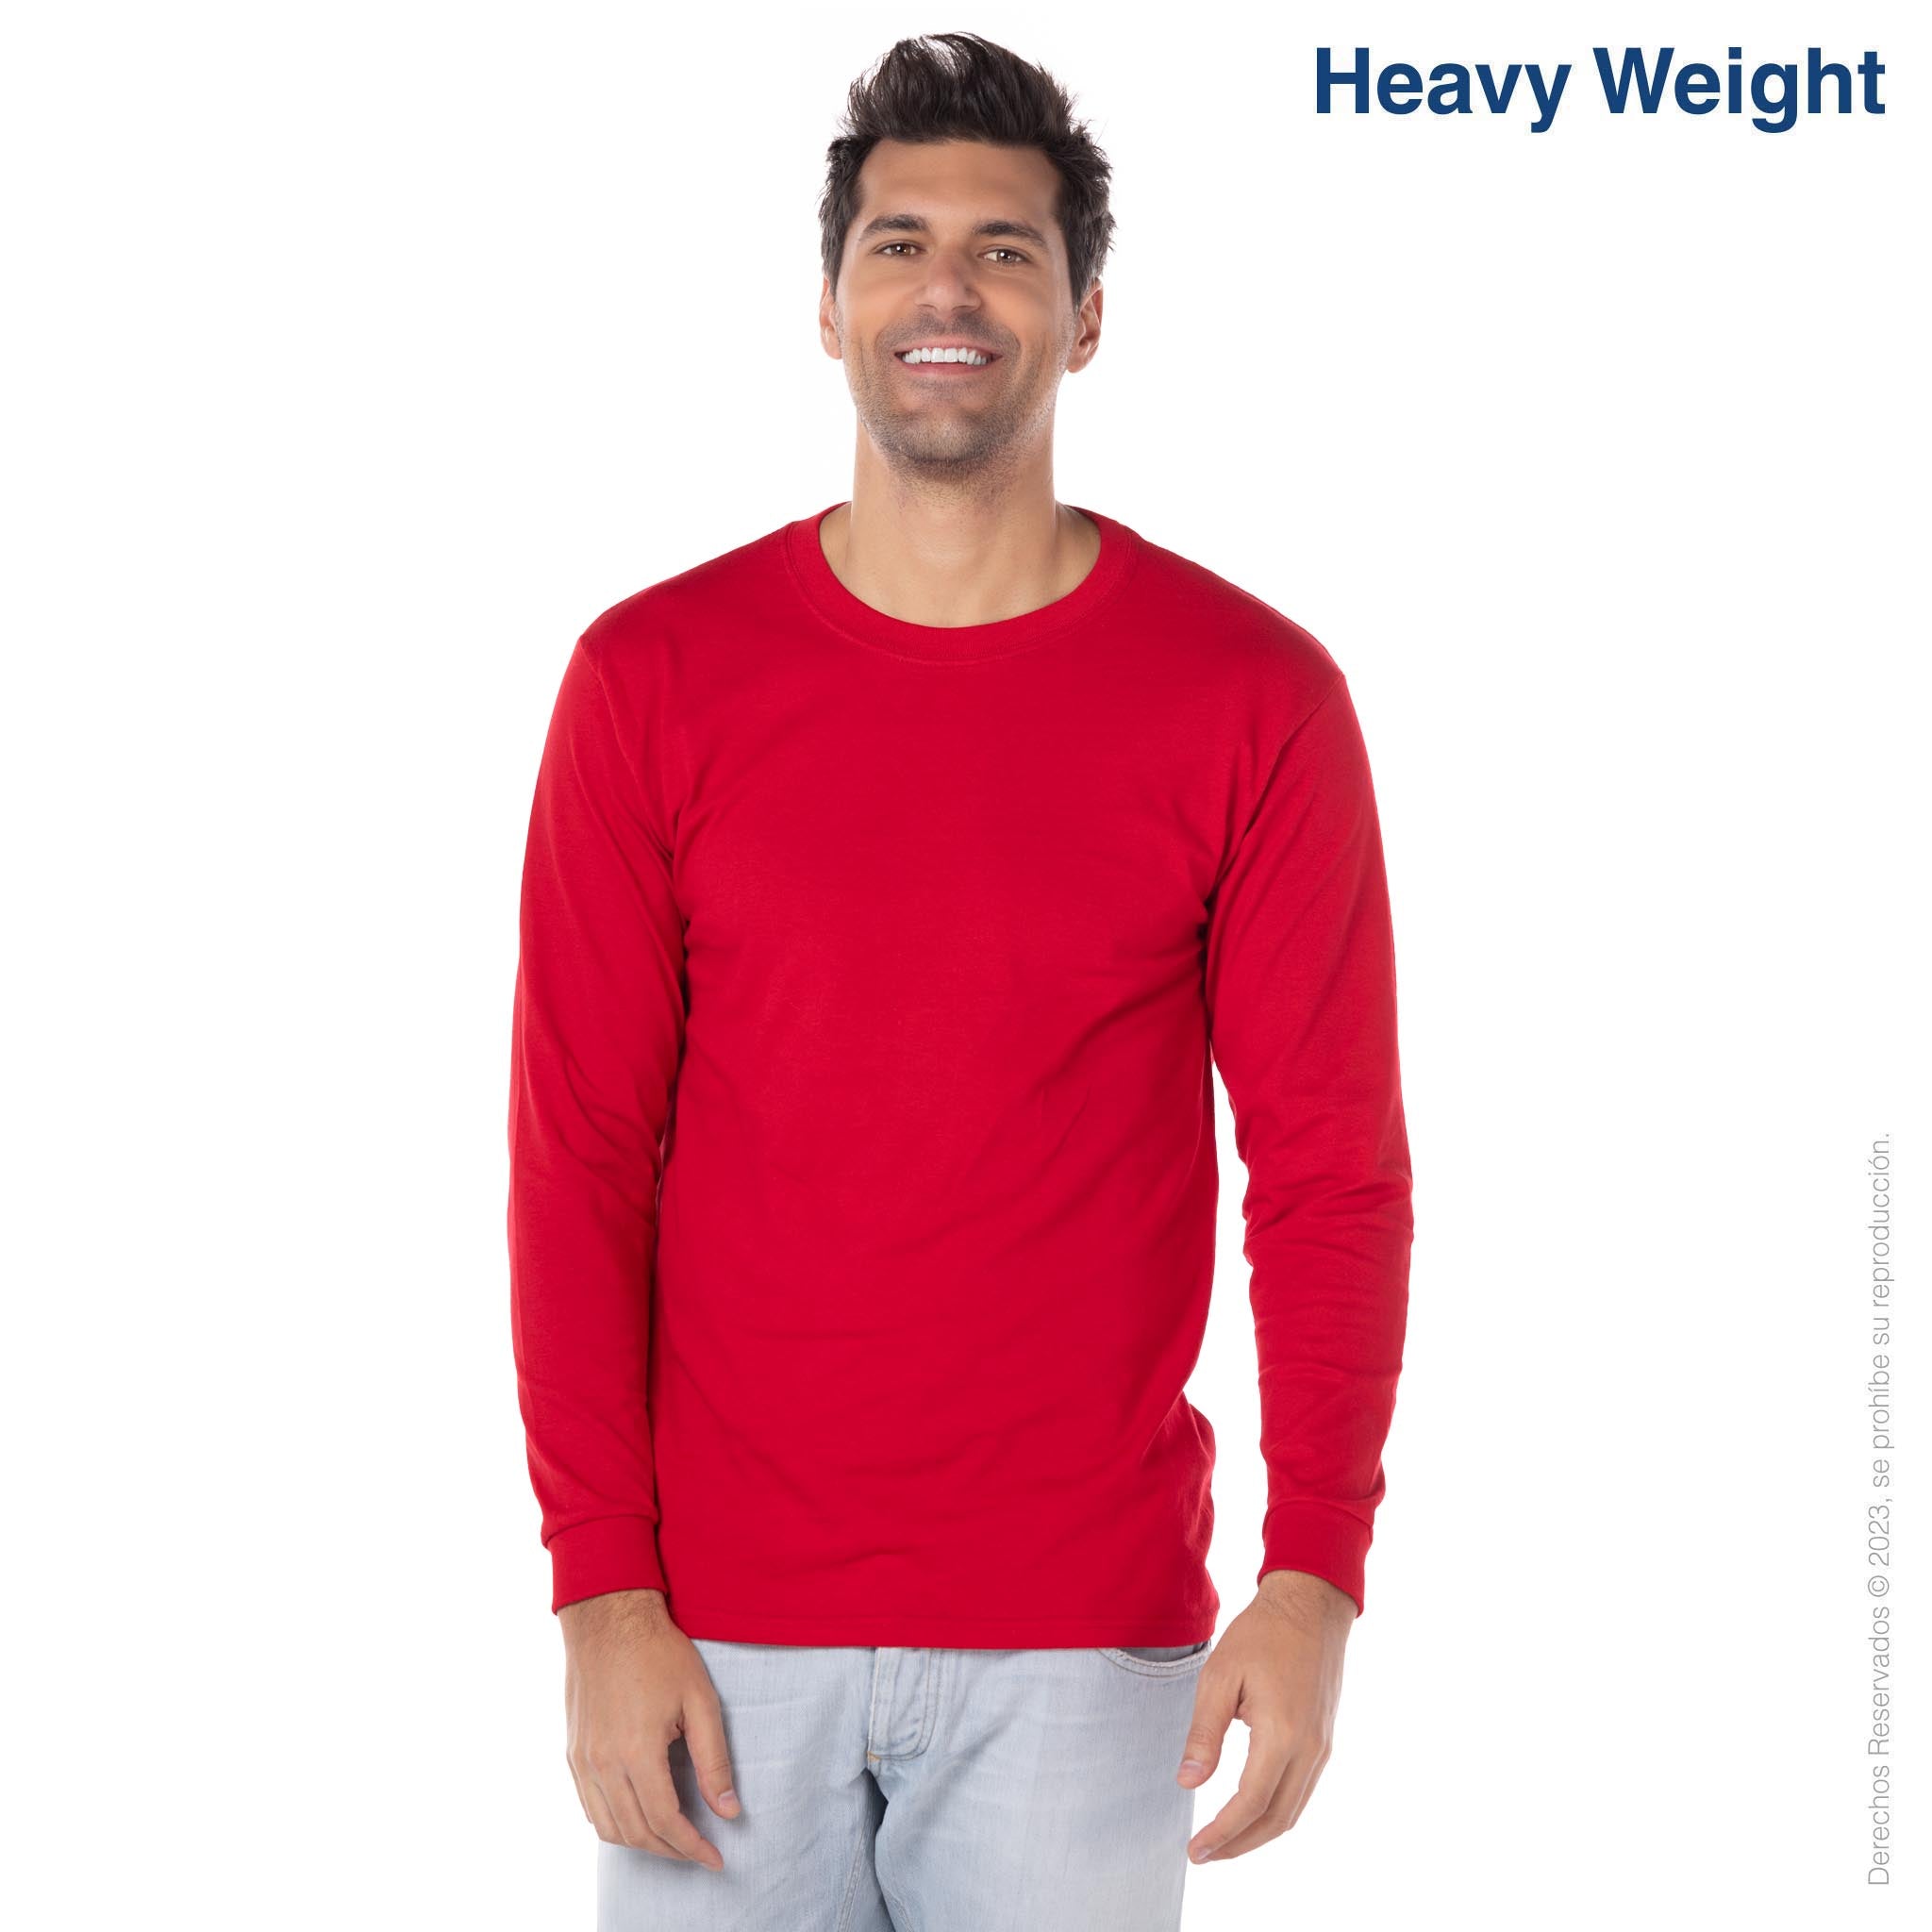 Men's Heavy Weight Crew Neck Short Sleeve T Shirt (Bright yellow) – Yazbek  USA Mint